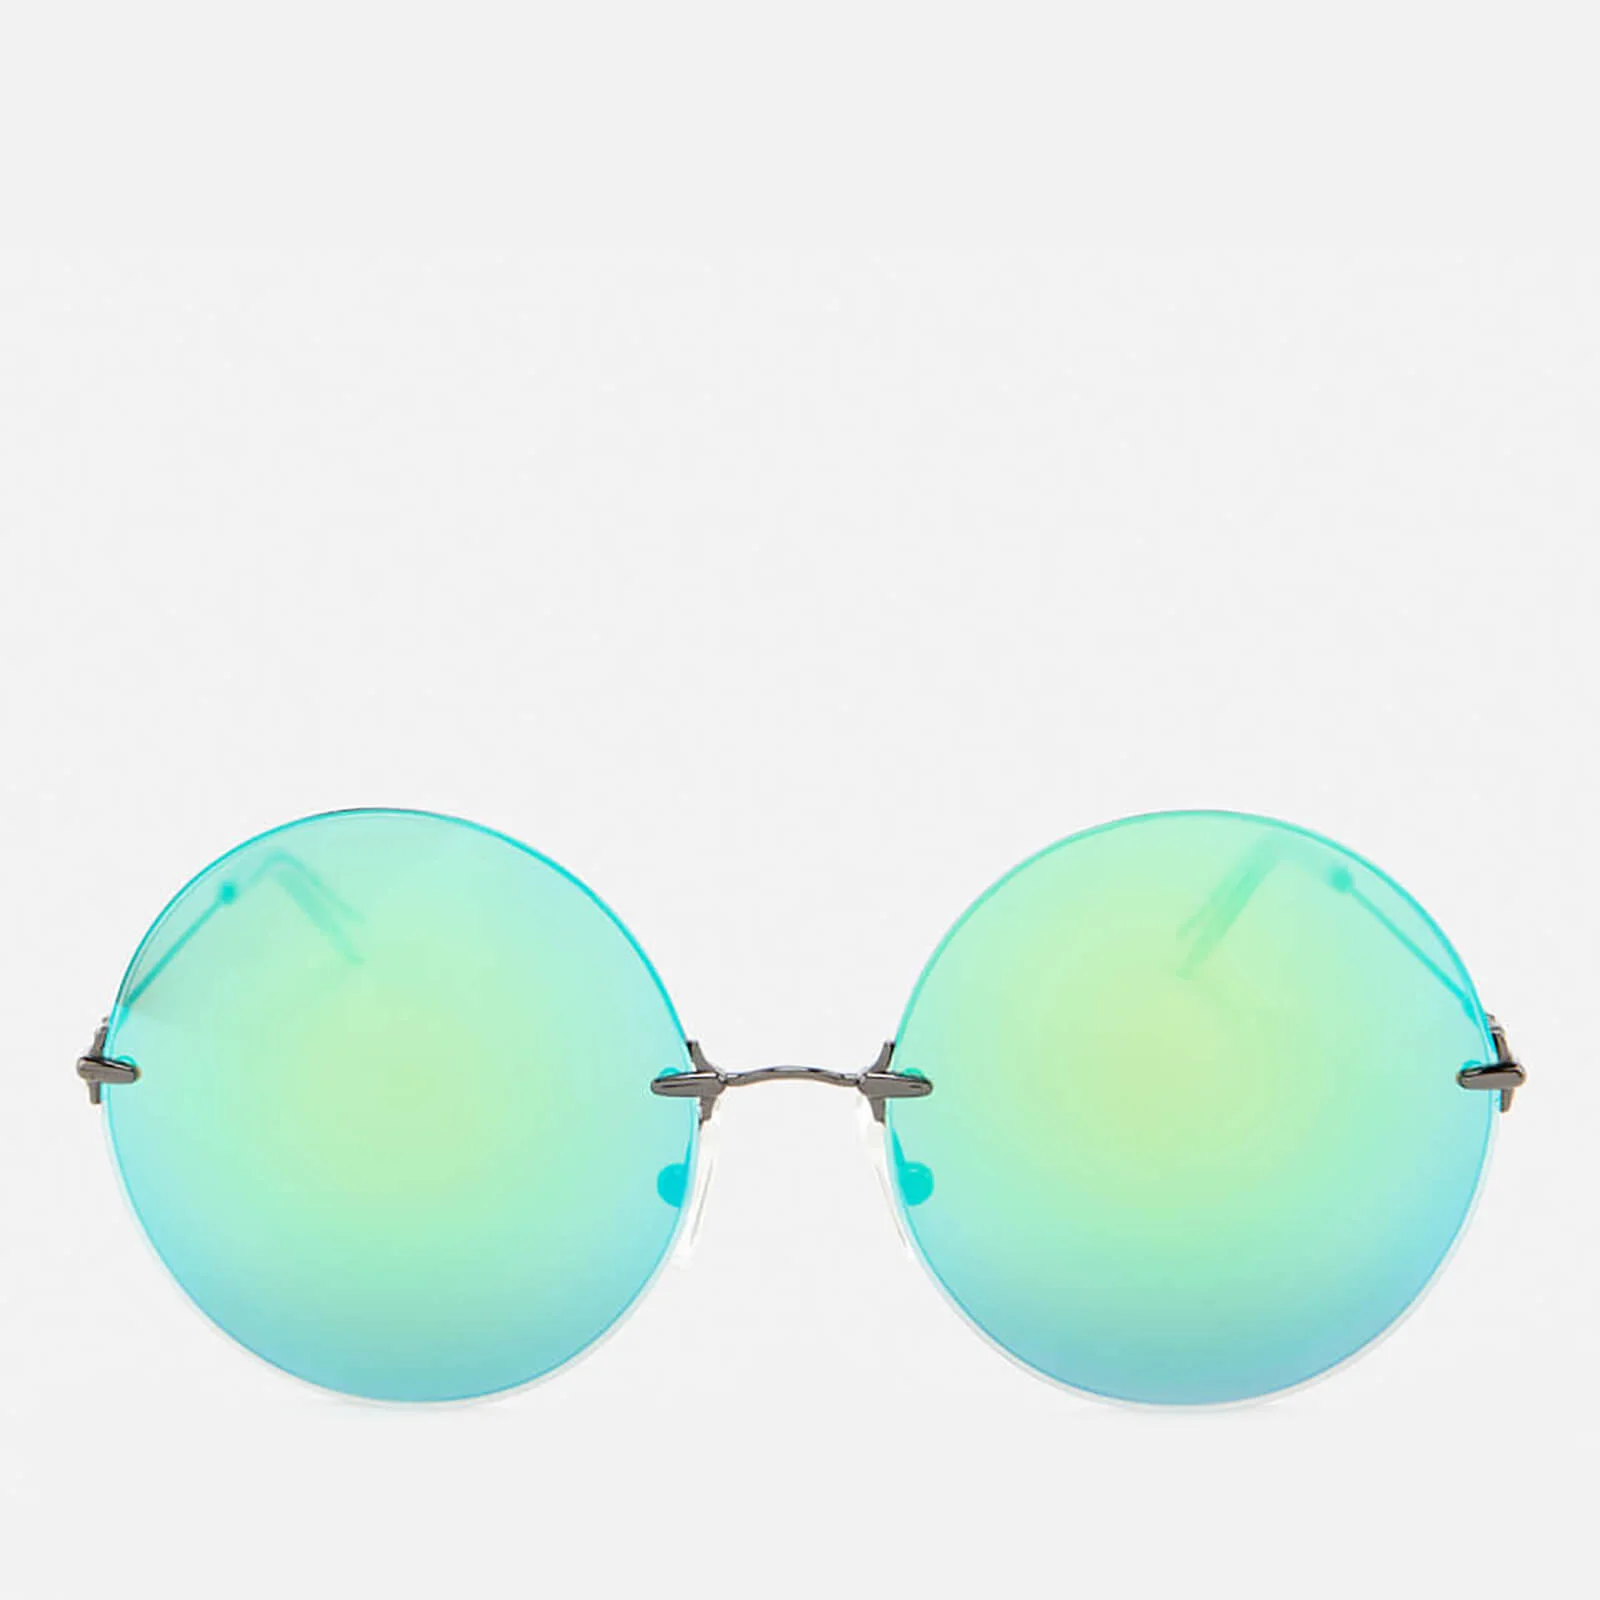 Christopher Kane Women's Round Frame Sunglasses - Green Image 1